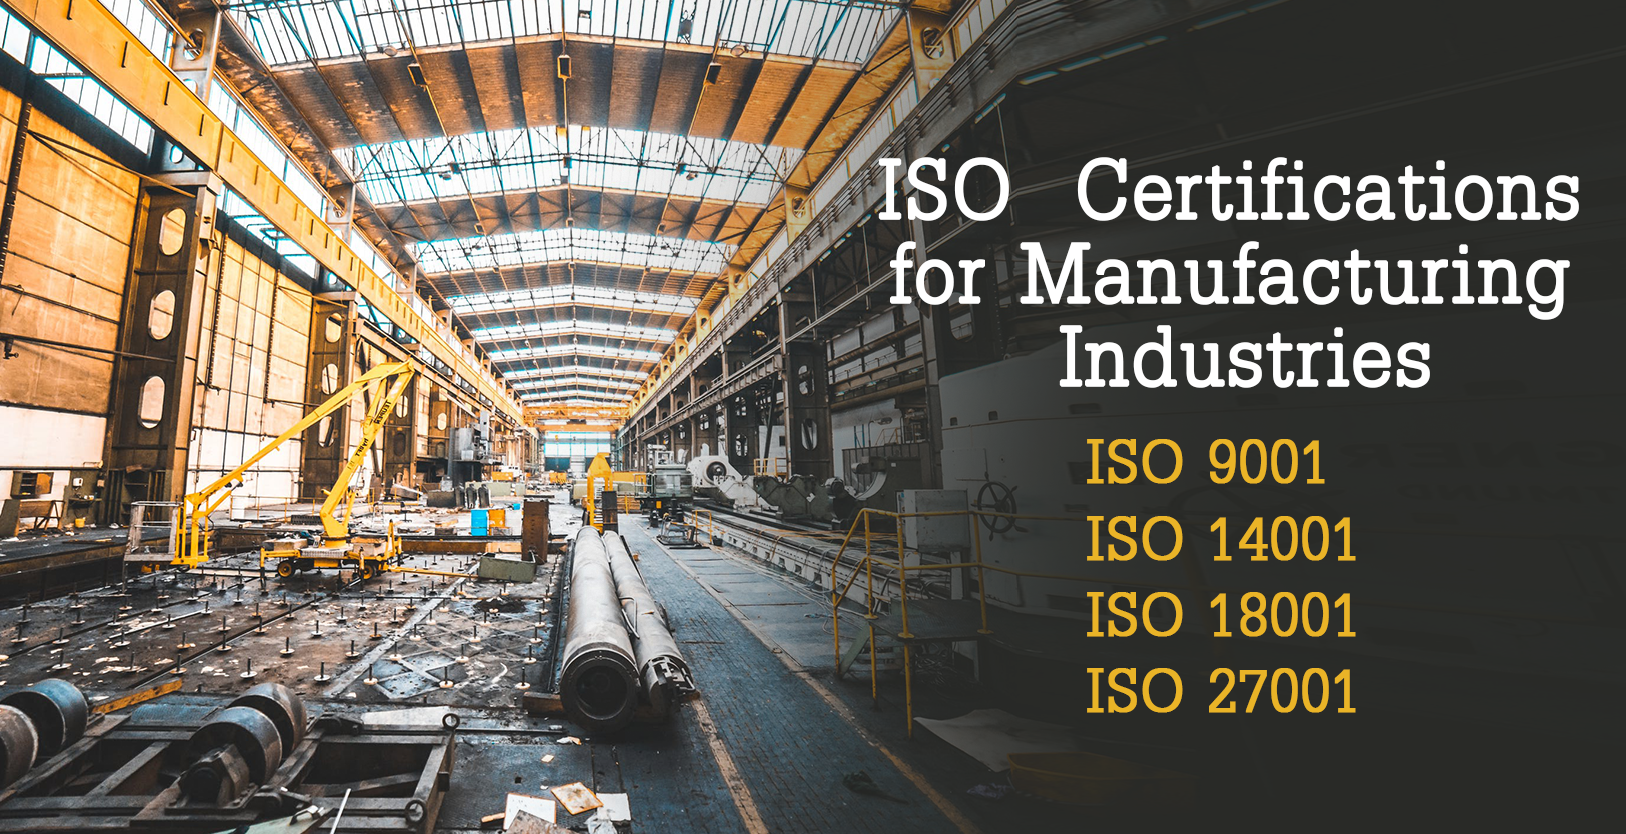 ISO certification in Bahrain